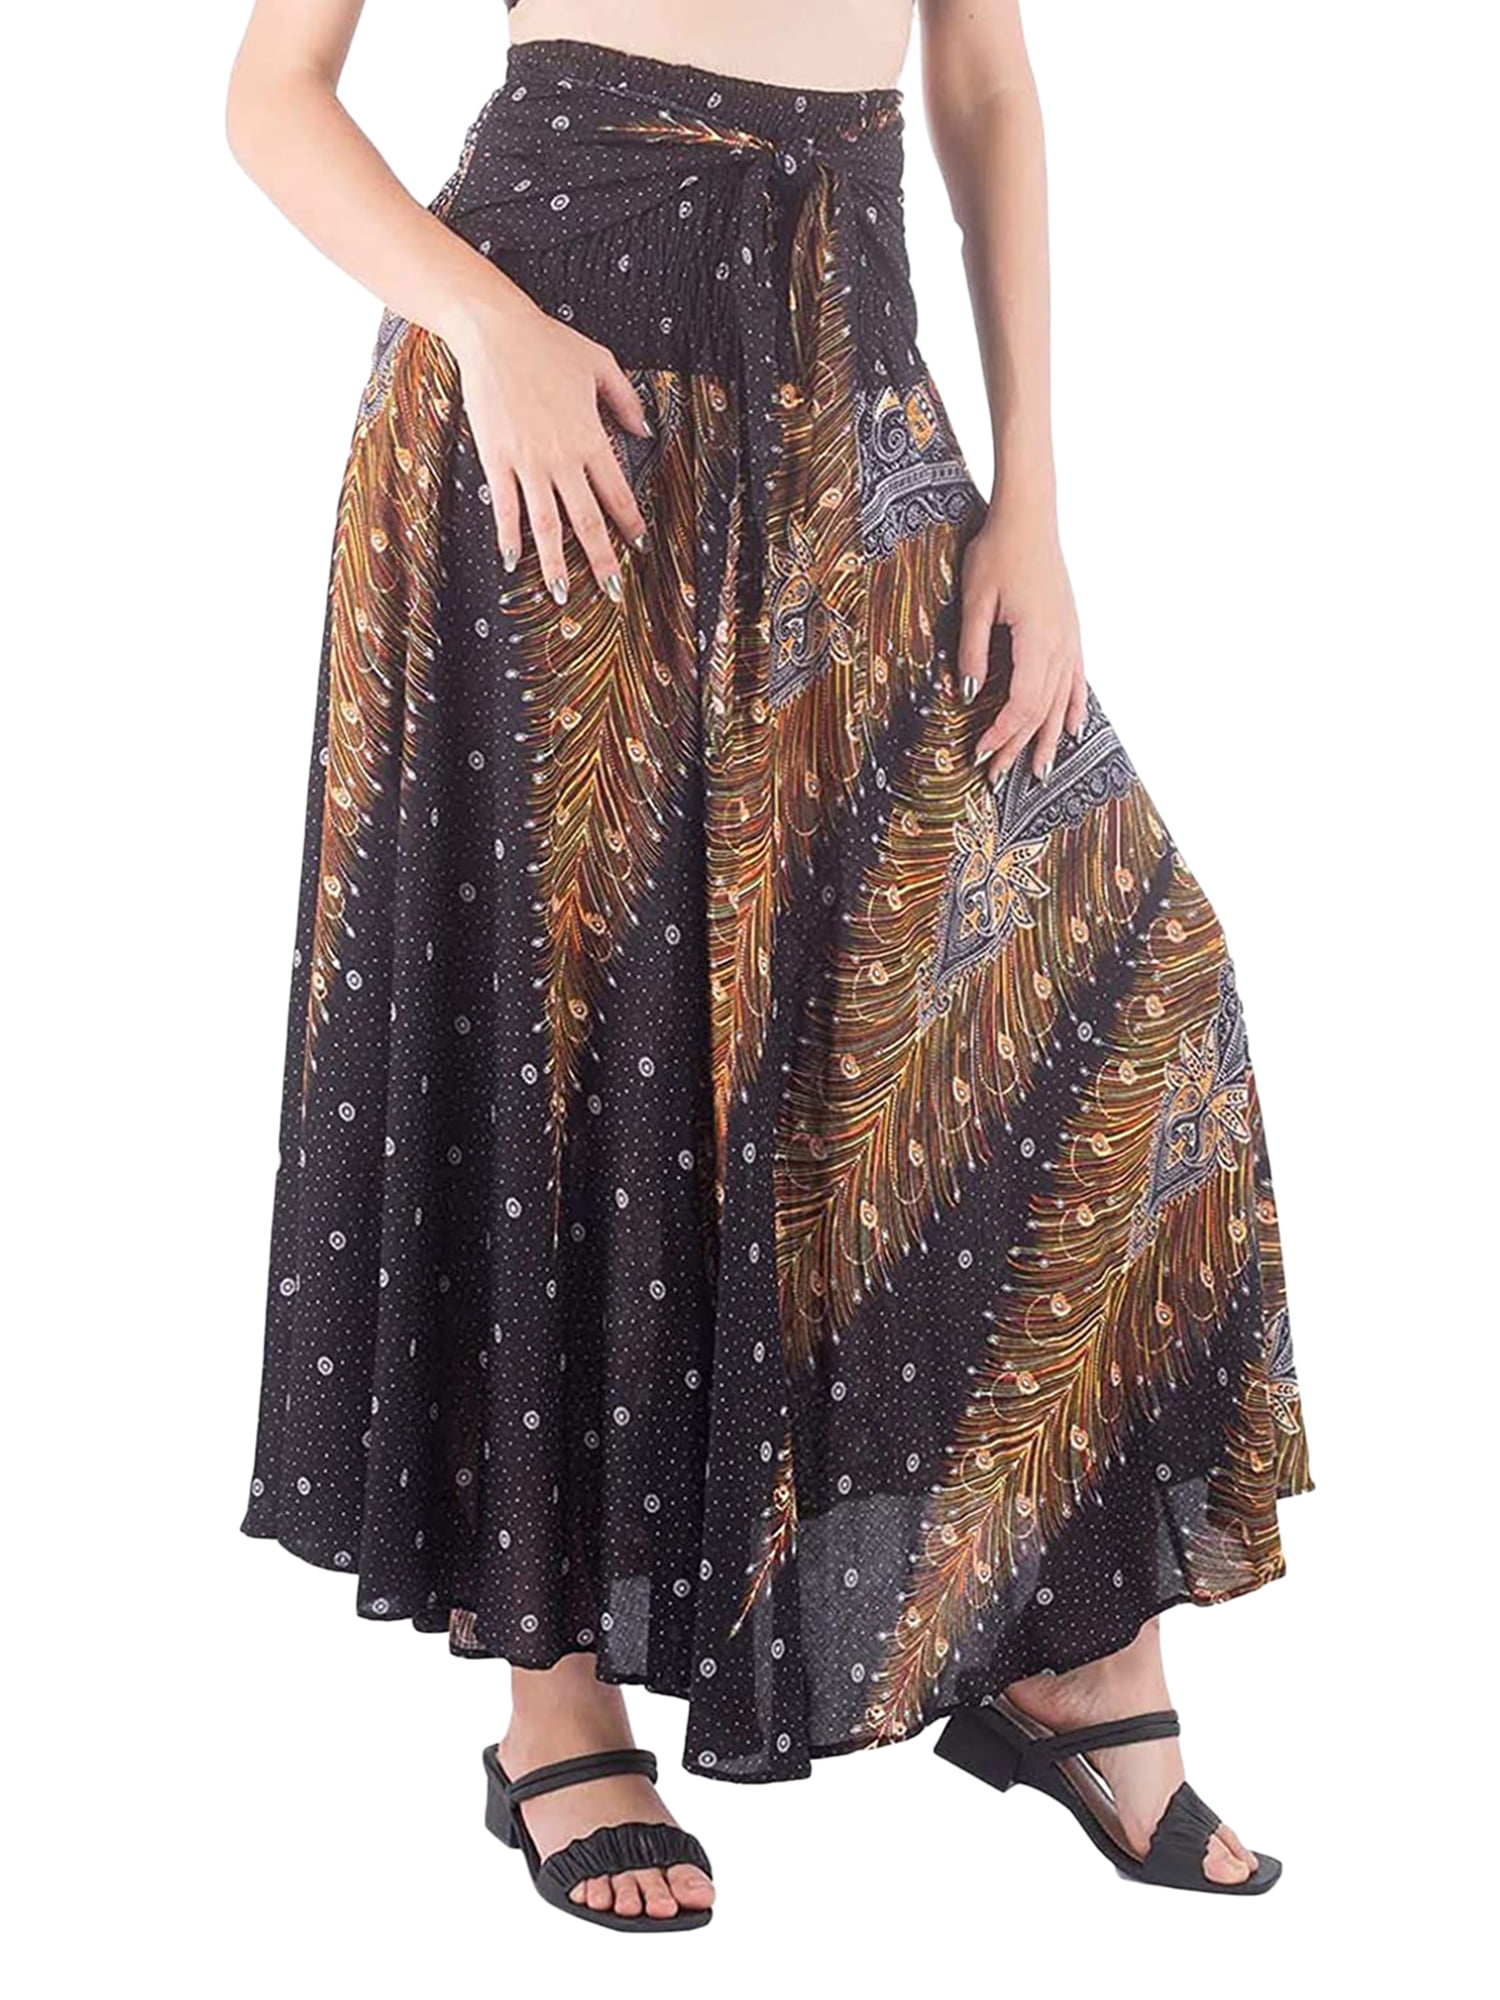 wybzd Women Long Maxi Boho Skirt High Waist Gypsy Skirt Plus Size ...